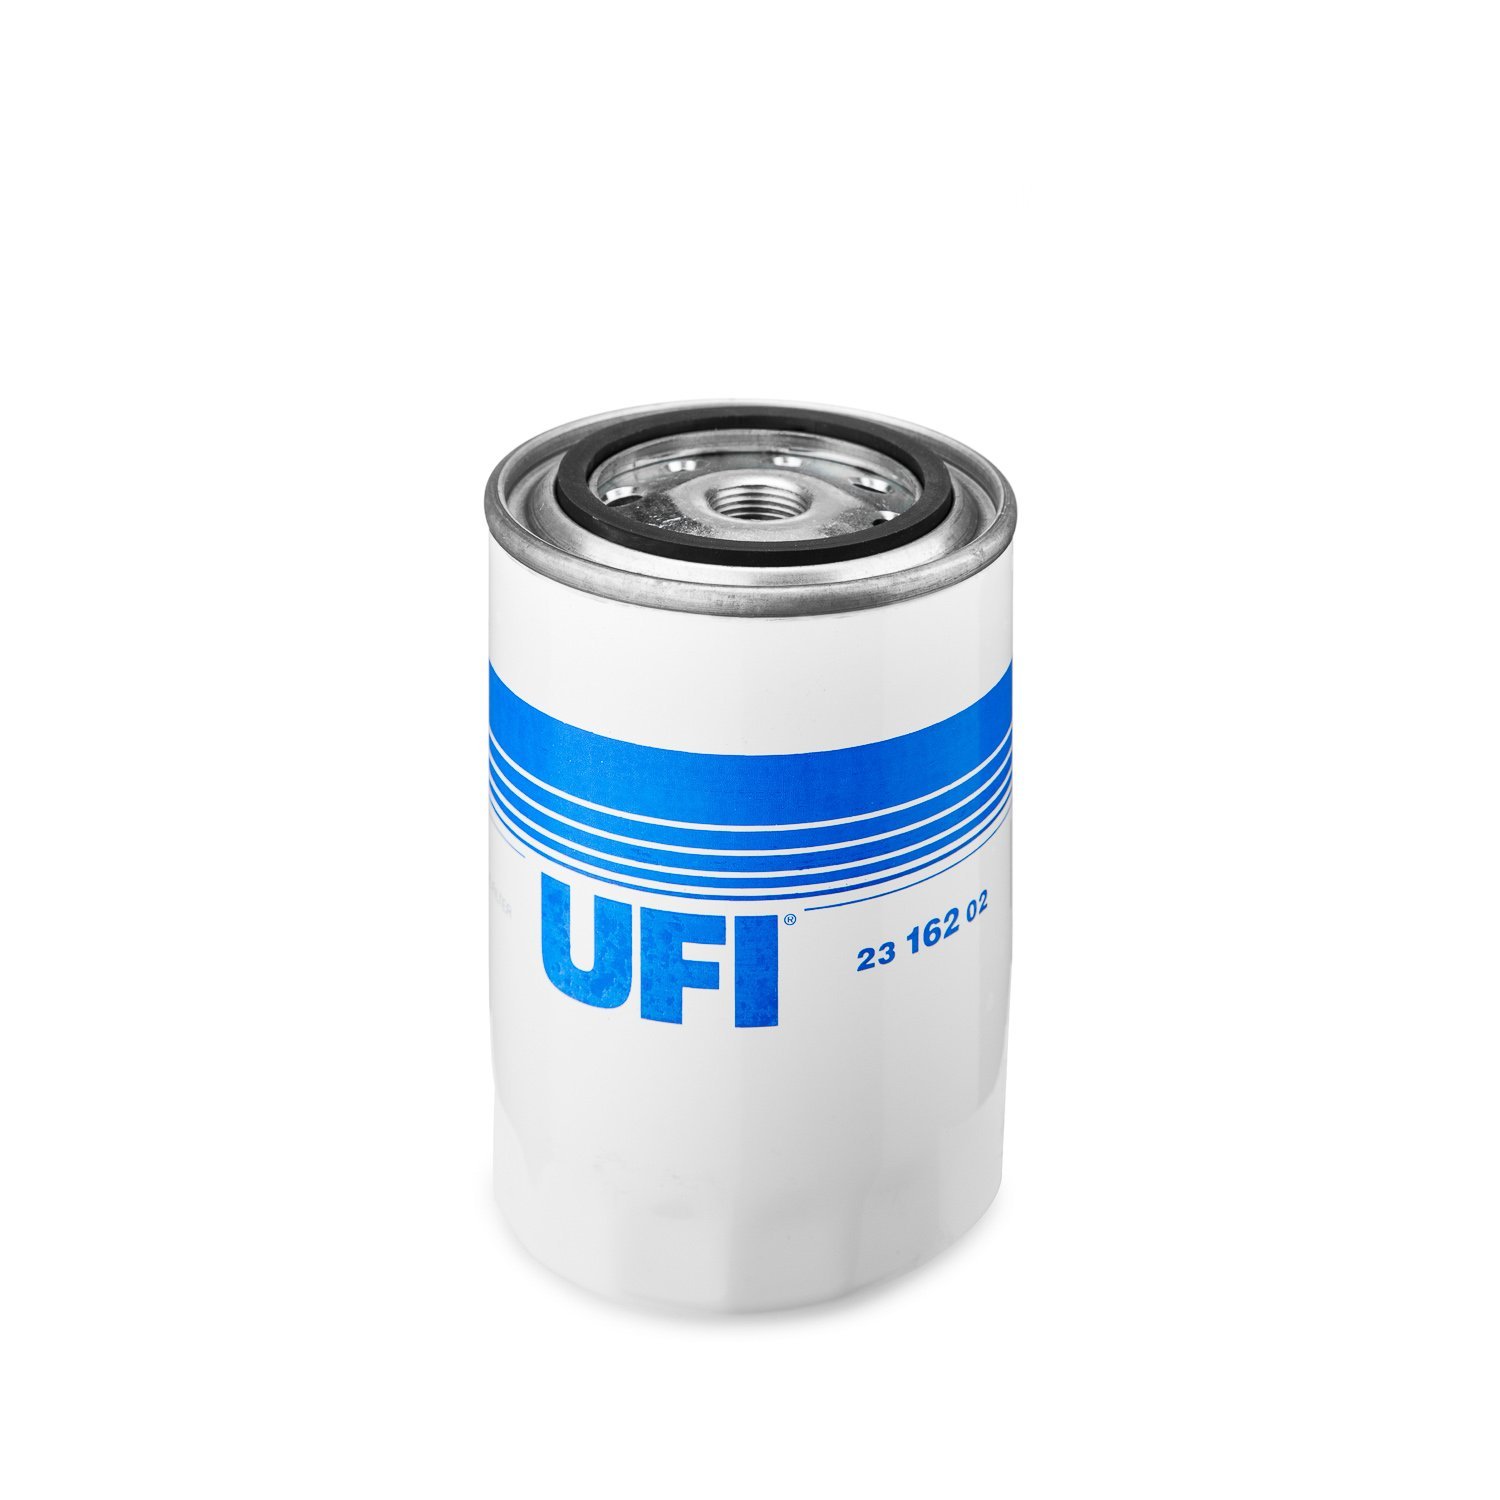 Ufi Filters 23.162.02 Ölfilter für Autos von UFI FILTERS